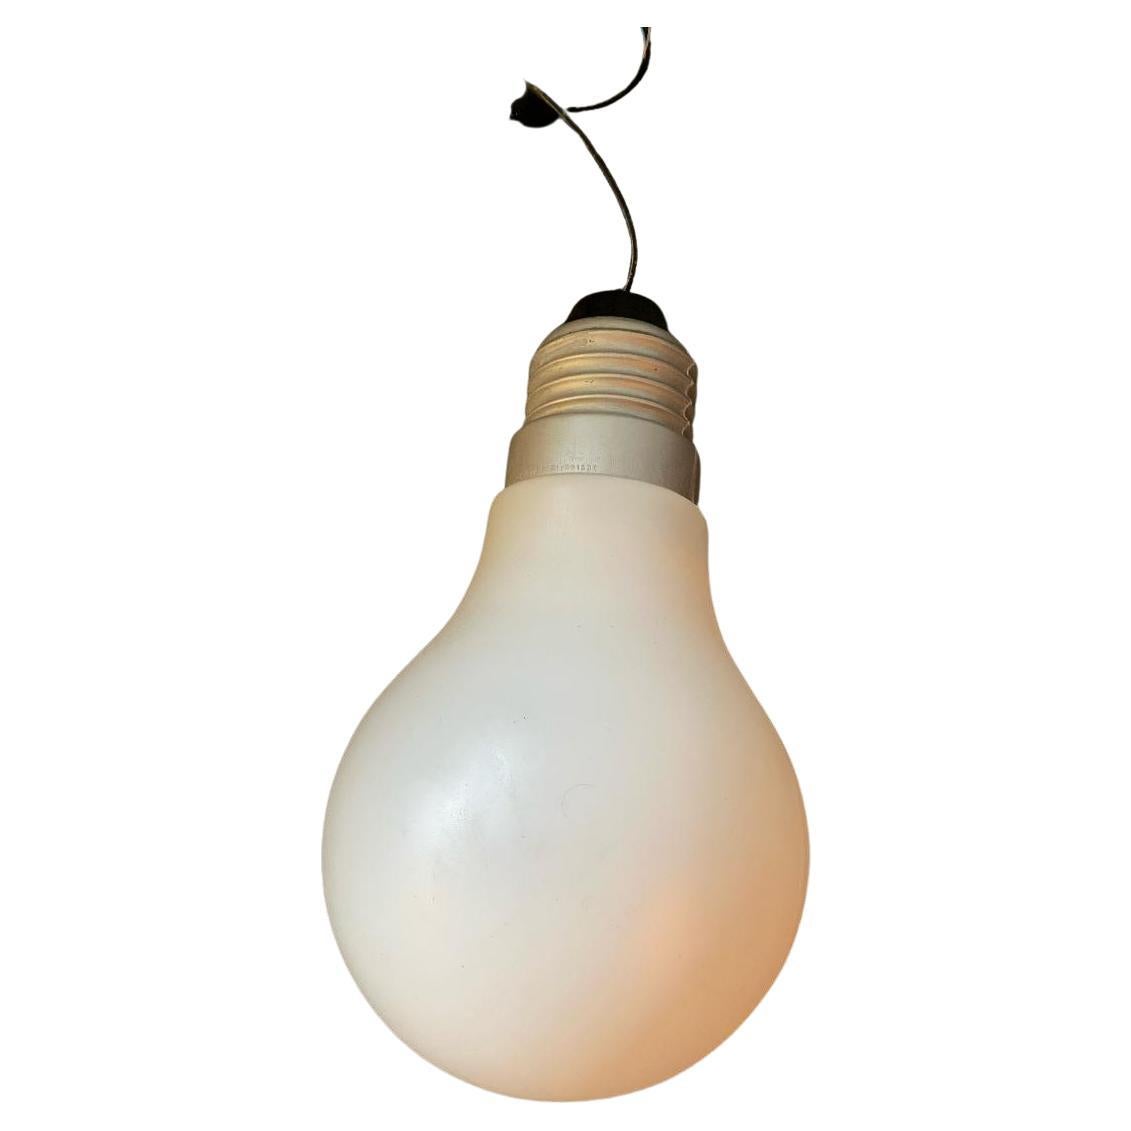 Outsized Light Bulb Steh- oder Hängeleuchte „Bulb Bulb“ von Ingo Maurer